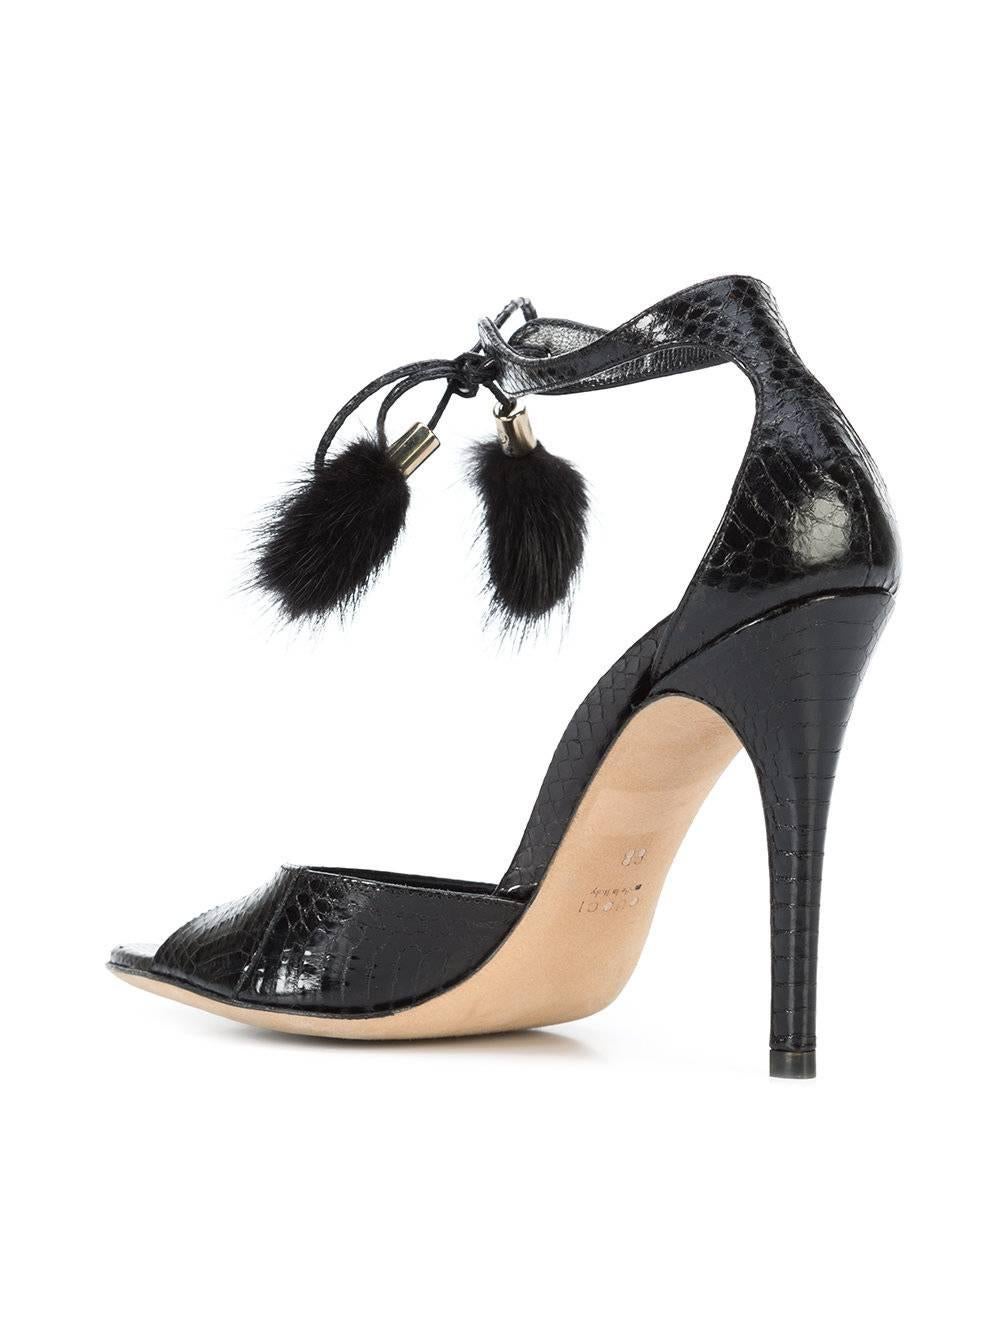 Women's Gucci New Black Embossed Snakeskin Fur Pom Pom Evening Sandals Heels in Box